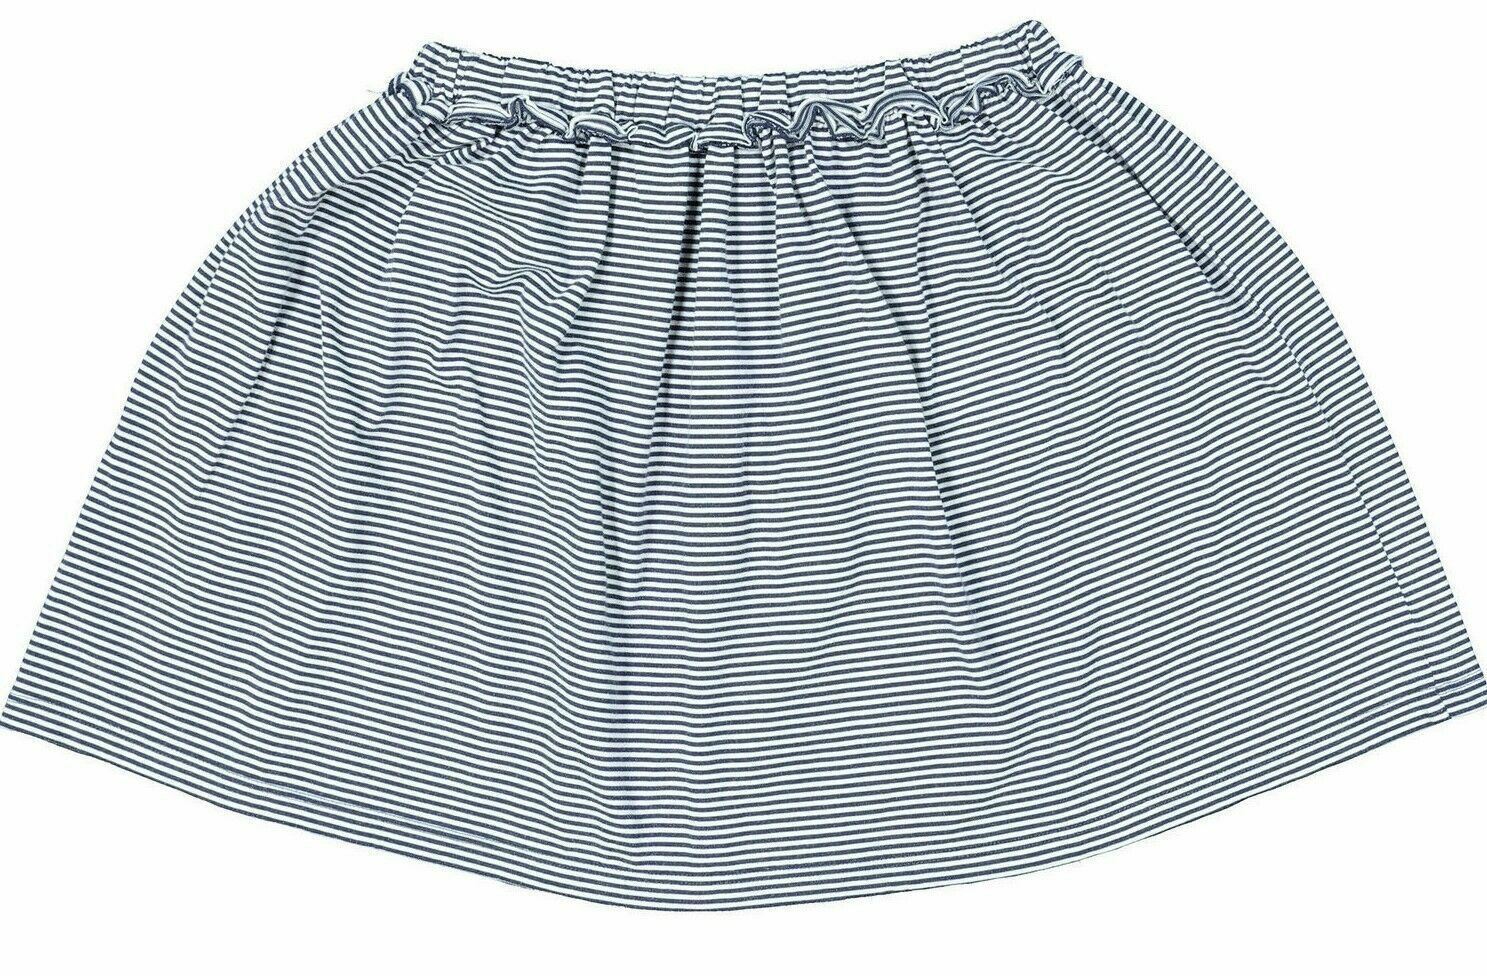 Genuine LACOSTE Girl's Skirt, Black and White Stripes, 10 years / 140cm